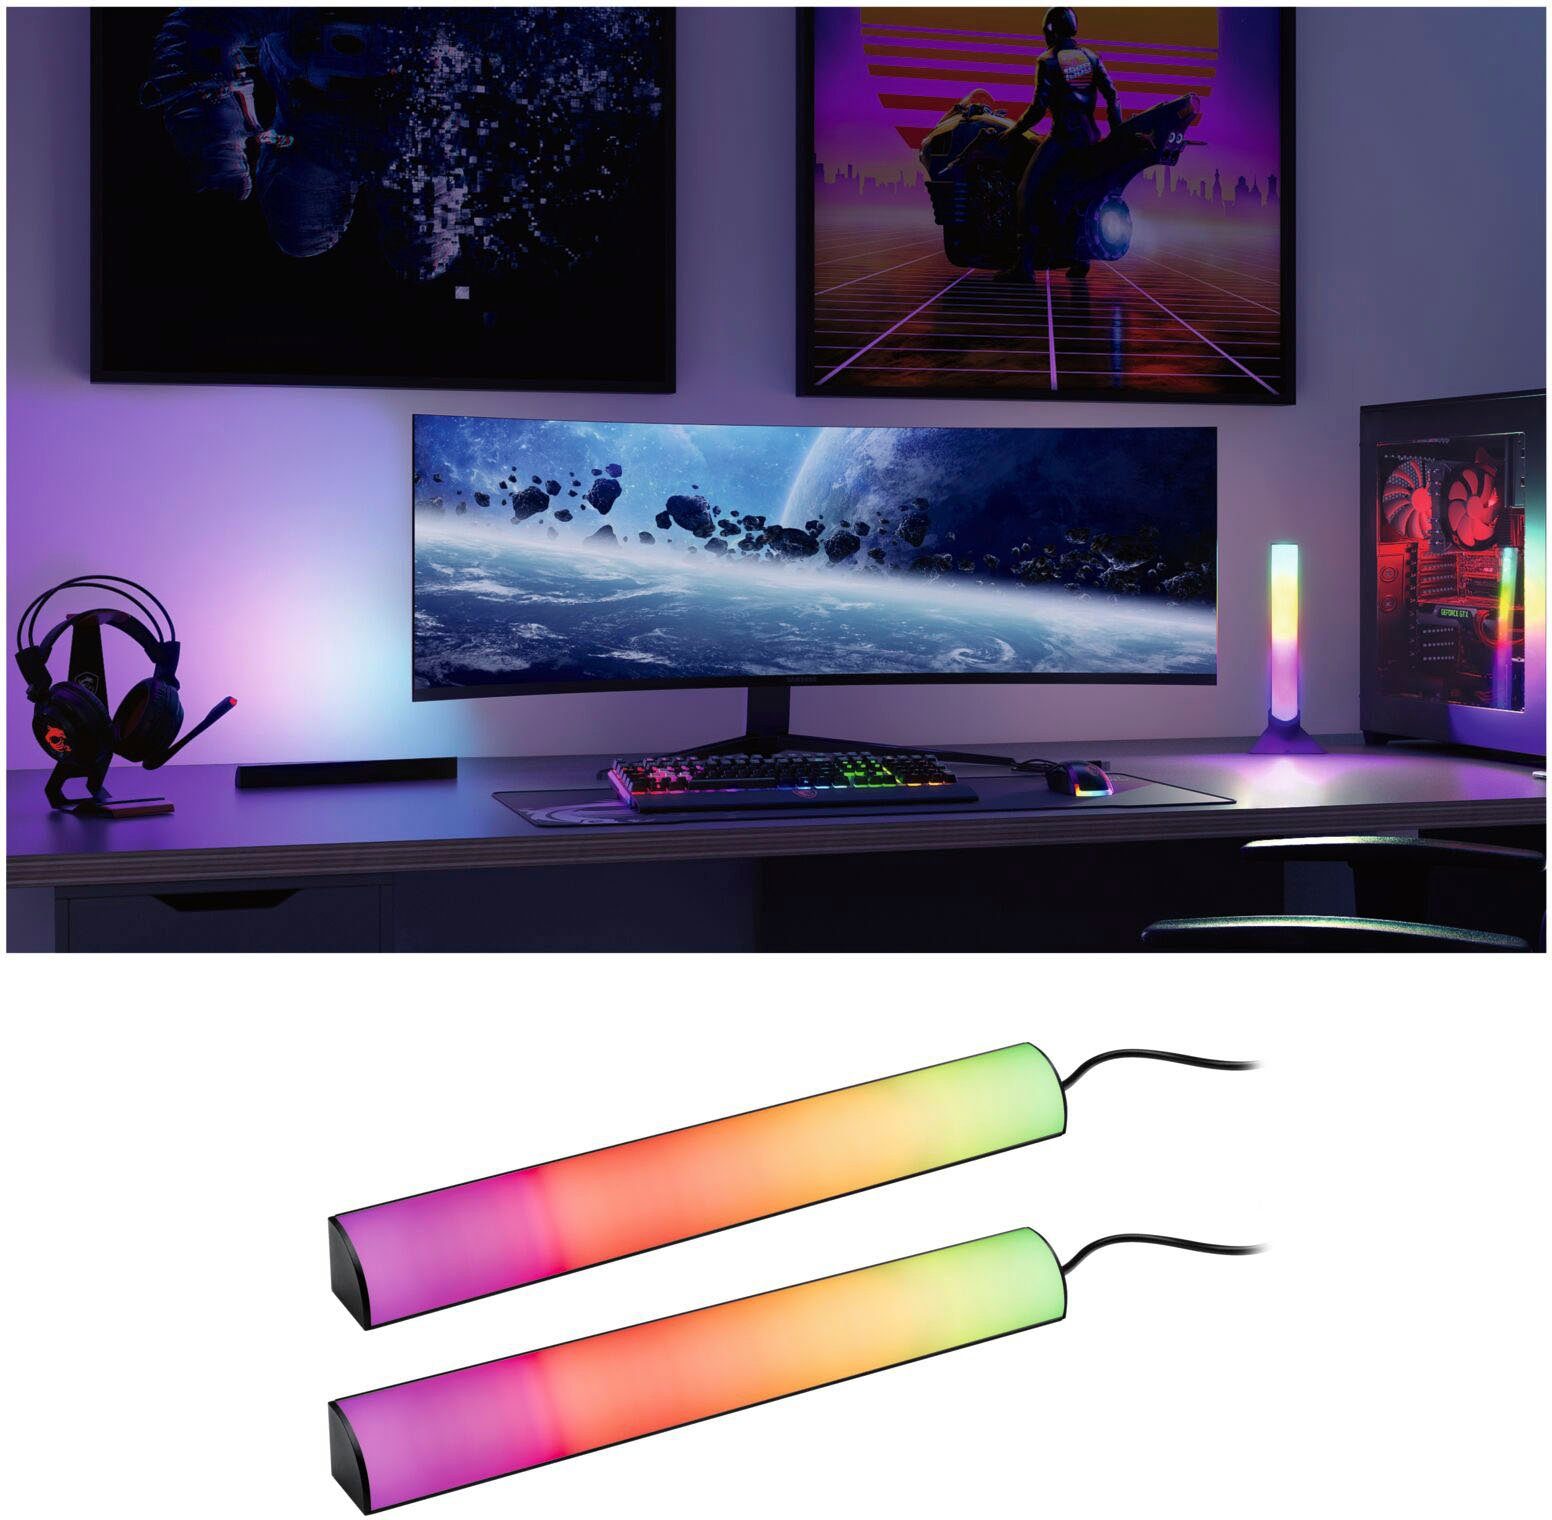 EntertainLED LED-Streifen Lightbar Rainbow 30x30mm 2-flammig 2x24lm, Paulmann 2x0,6W Dynamic RGB